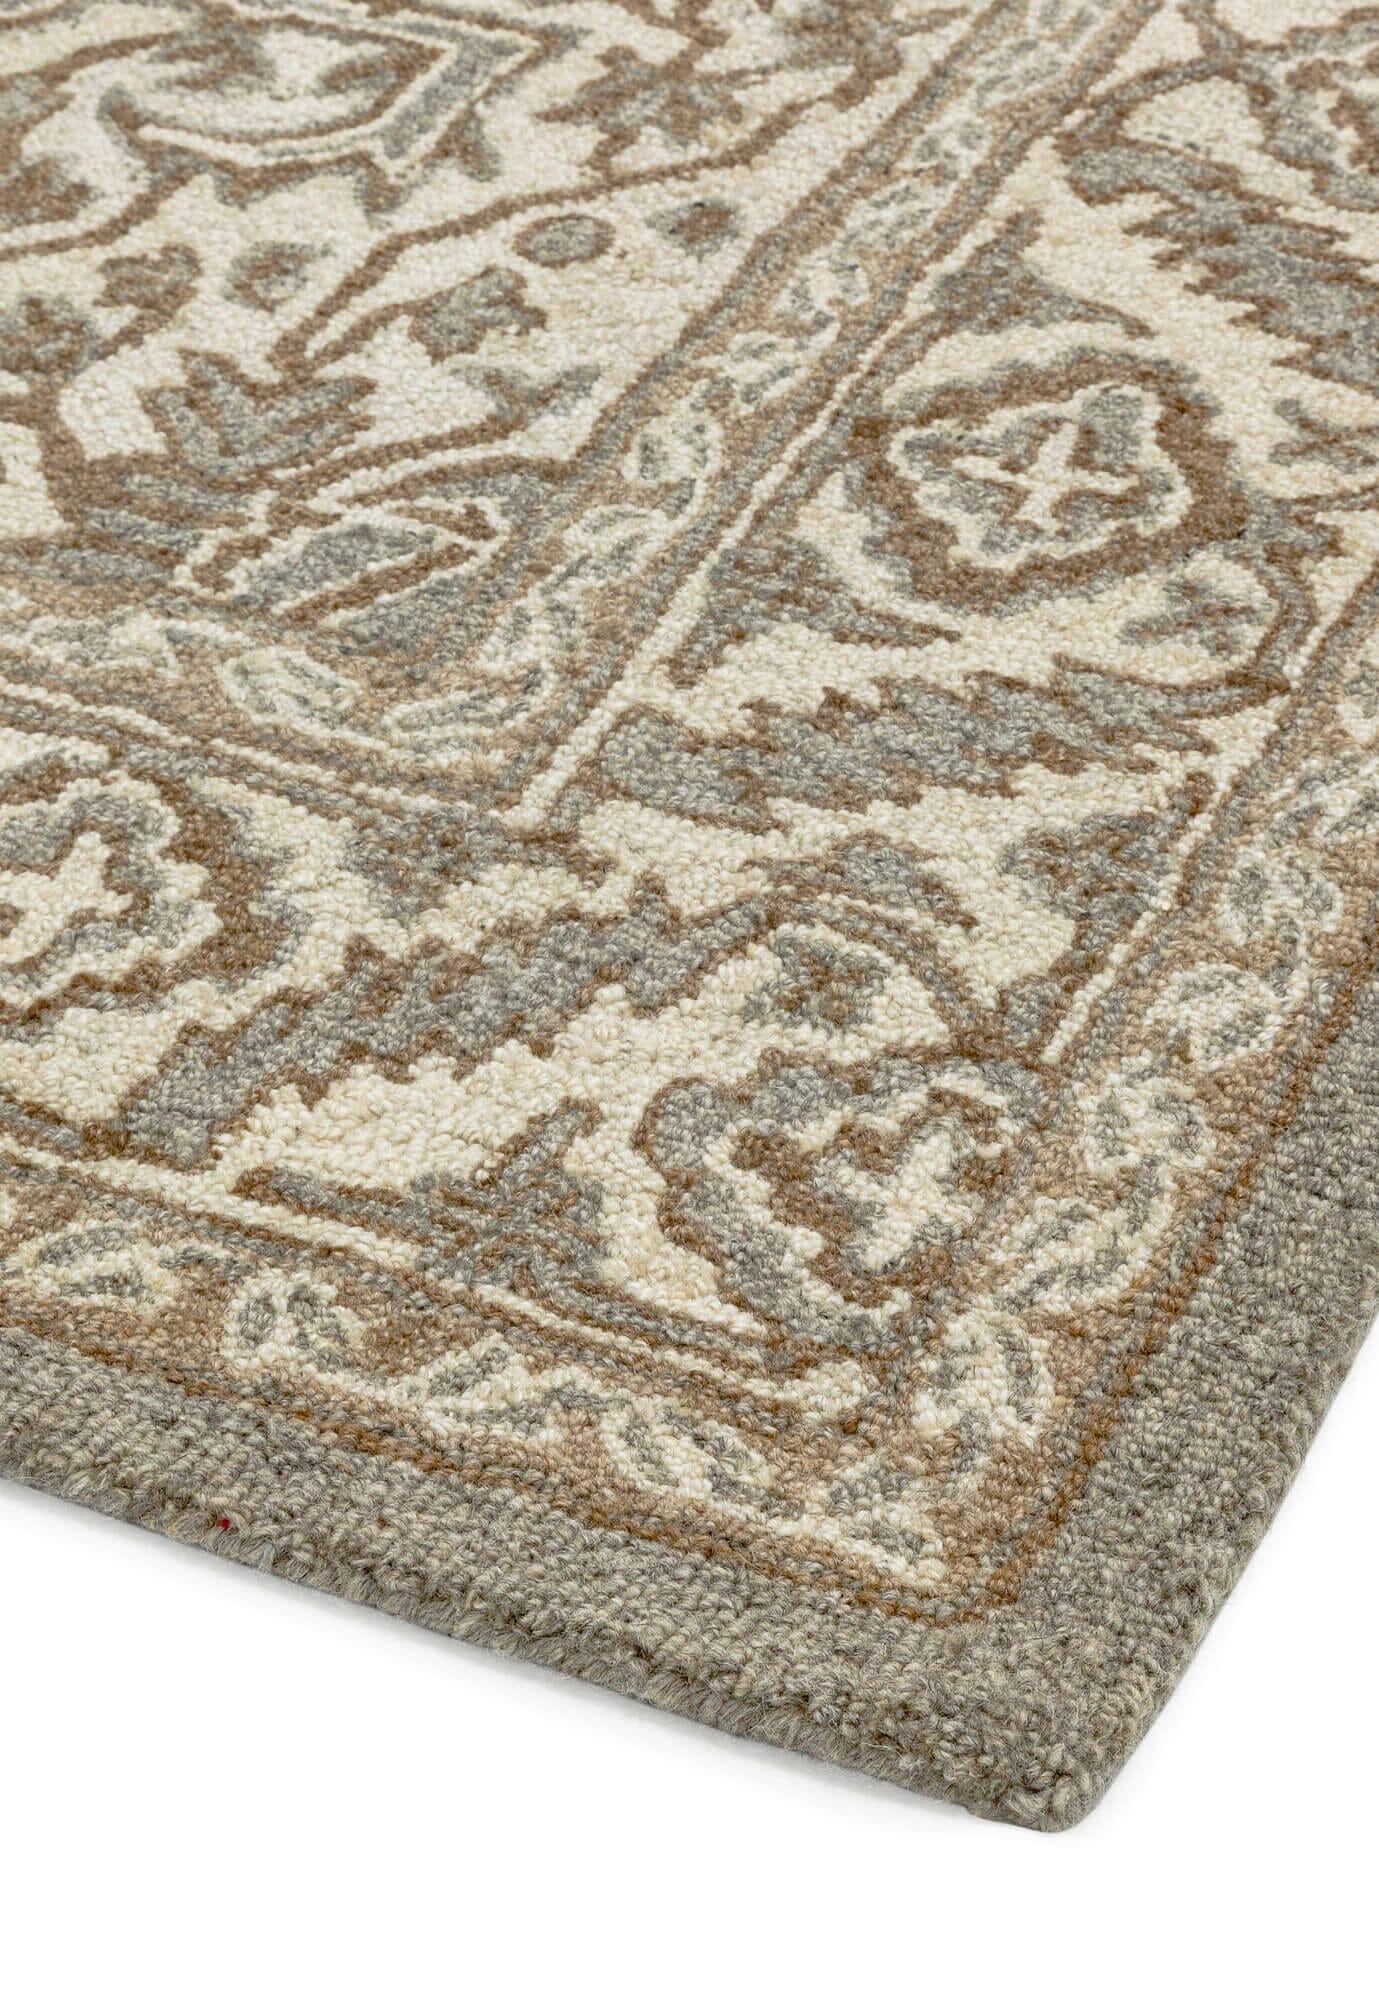  Asiatic Carpets-Asiatic Carpets Bronte Fine Loop Hand Tufted Rug Natural - 120 x 170cm-Beige, Natural 301 